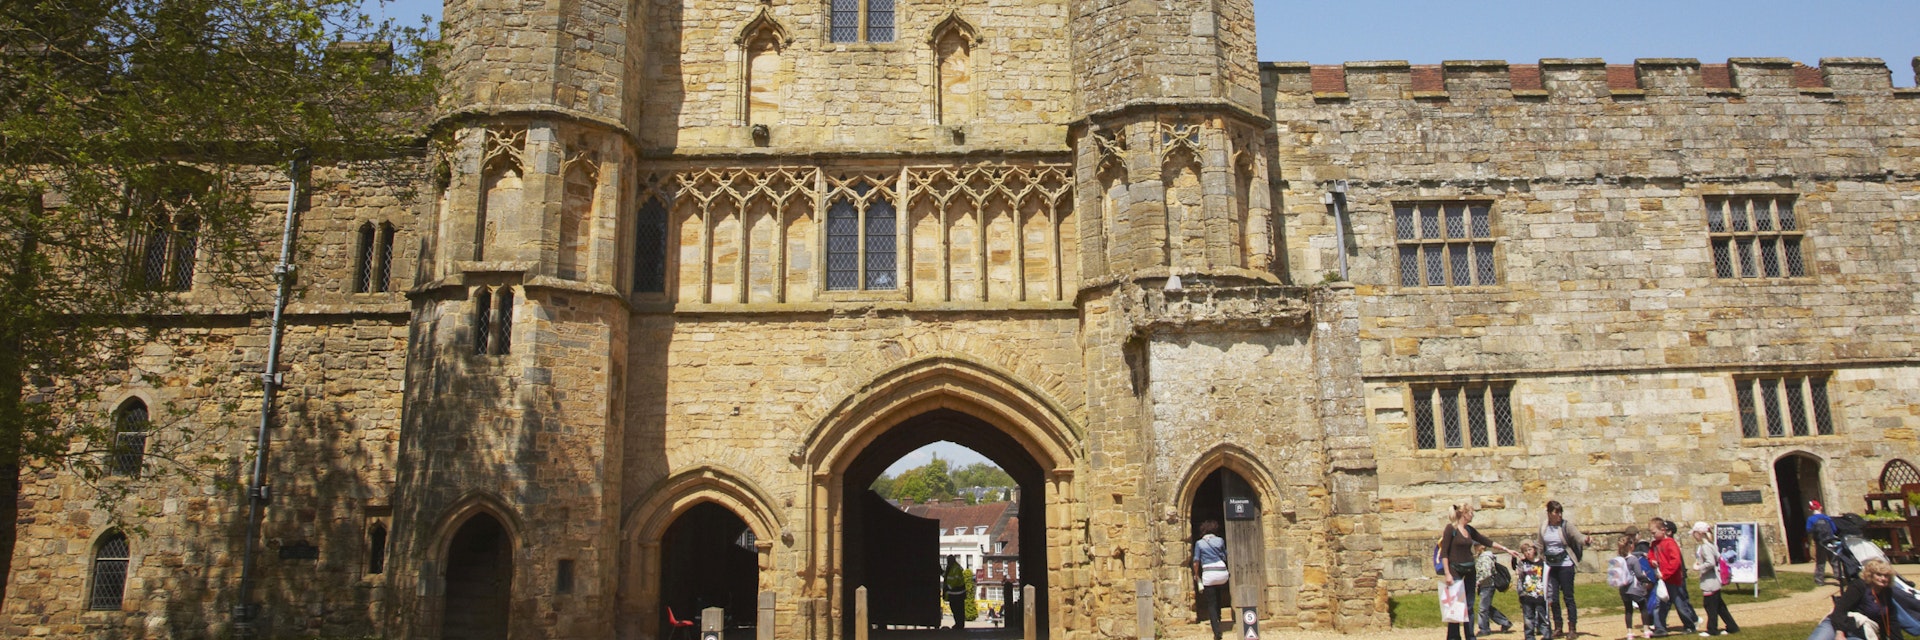 Great Gatehouse 1338, Battle Abbey, Battle, East Sussex, England